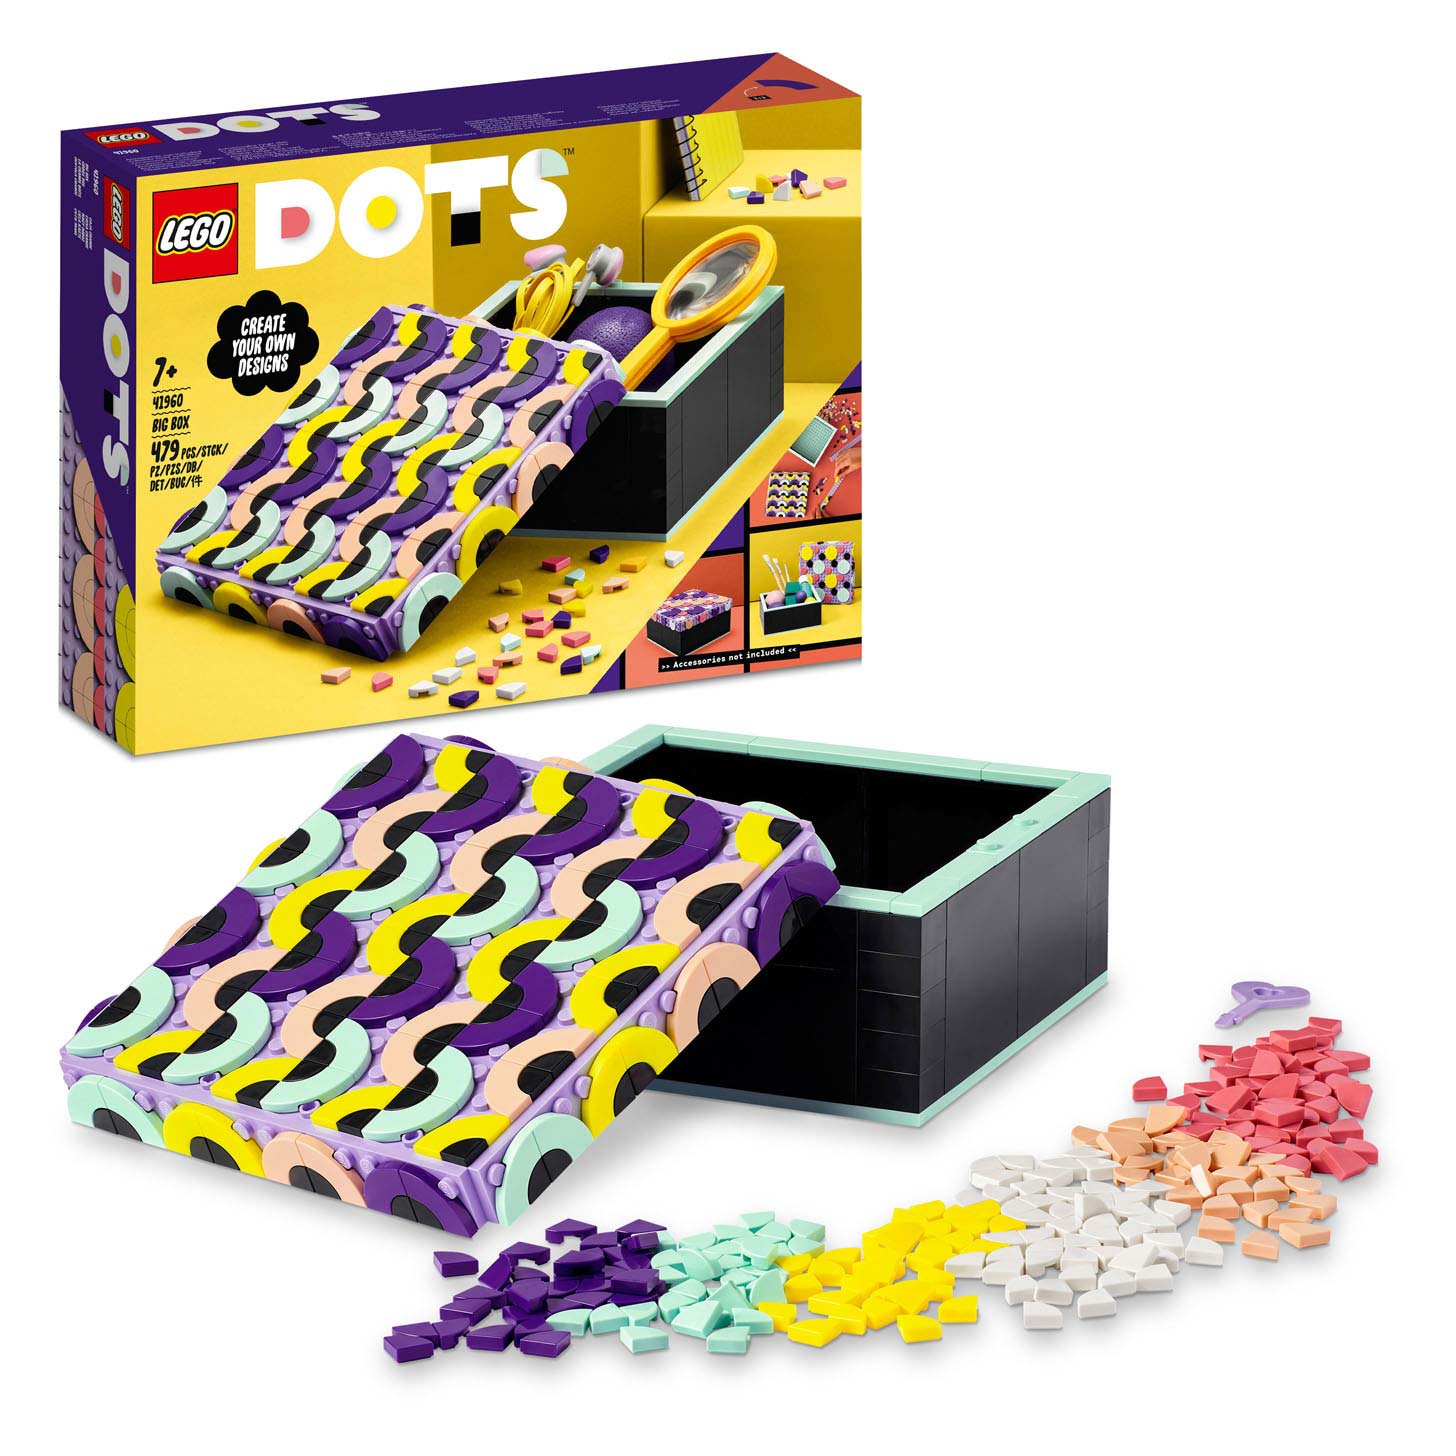 LEGO DOTS 41960 Grote Box online | Lobbes Speelgoed